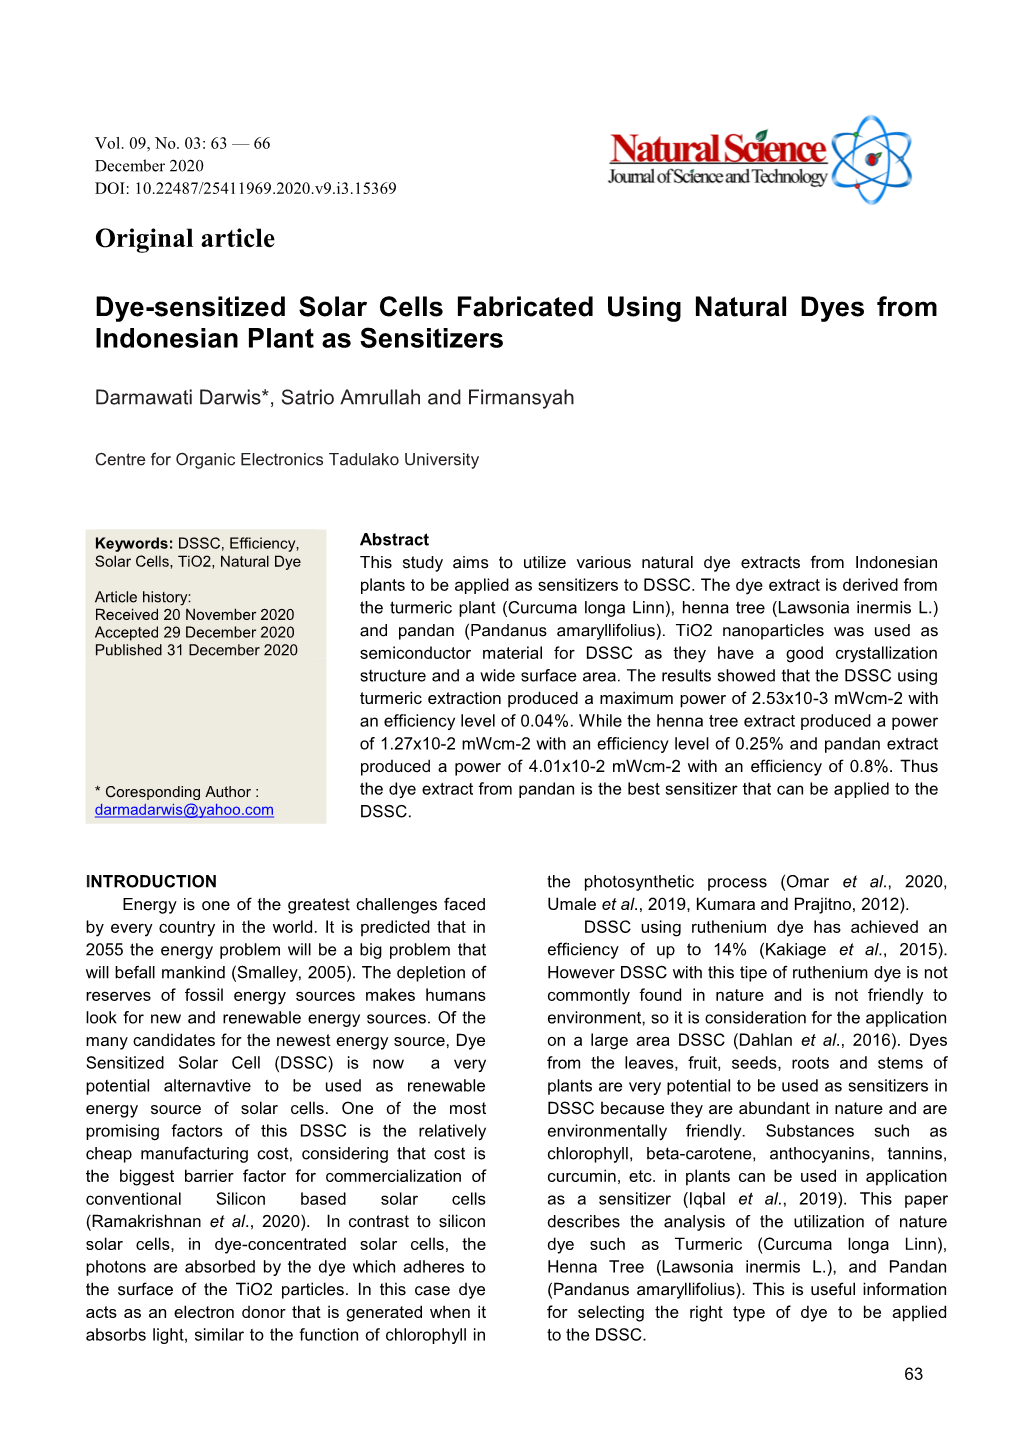 Original Article Dye-Sensitized Solar Cells Fabricated Using Natural